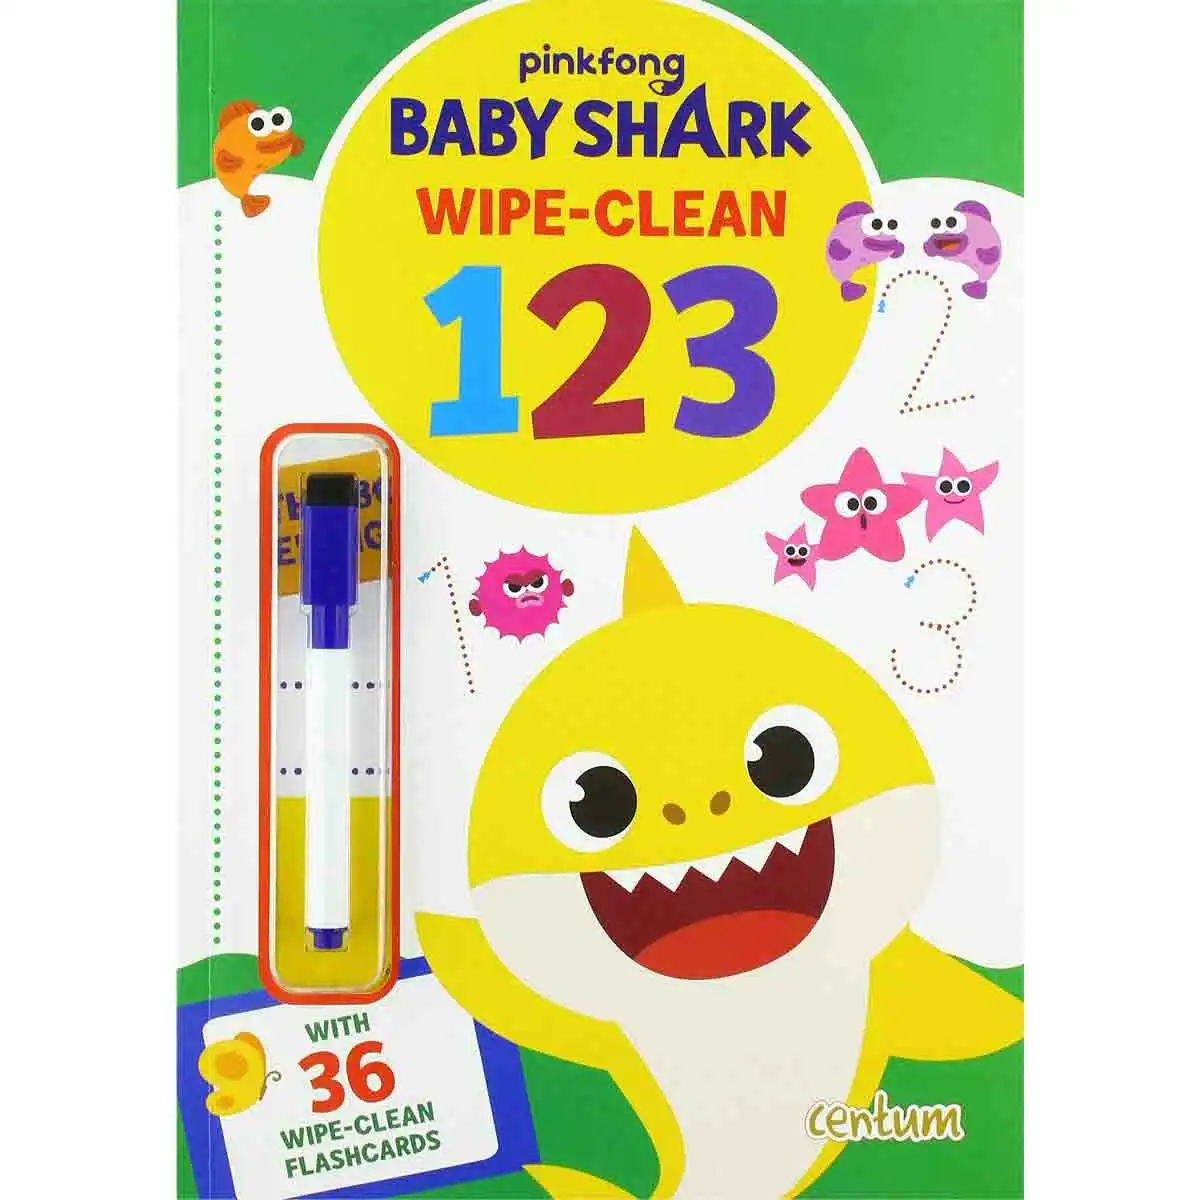 Baby Shark: Let's Learn 123